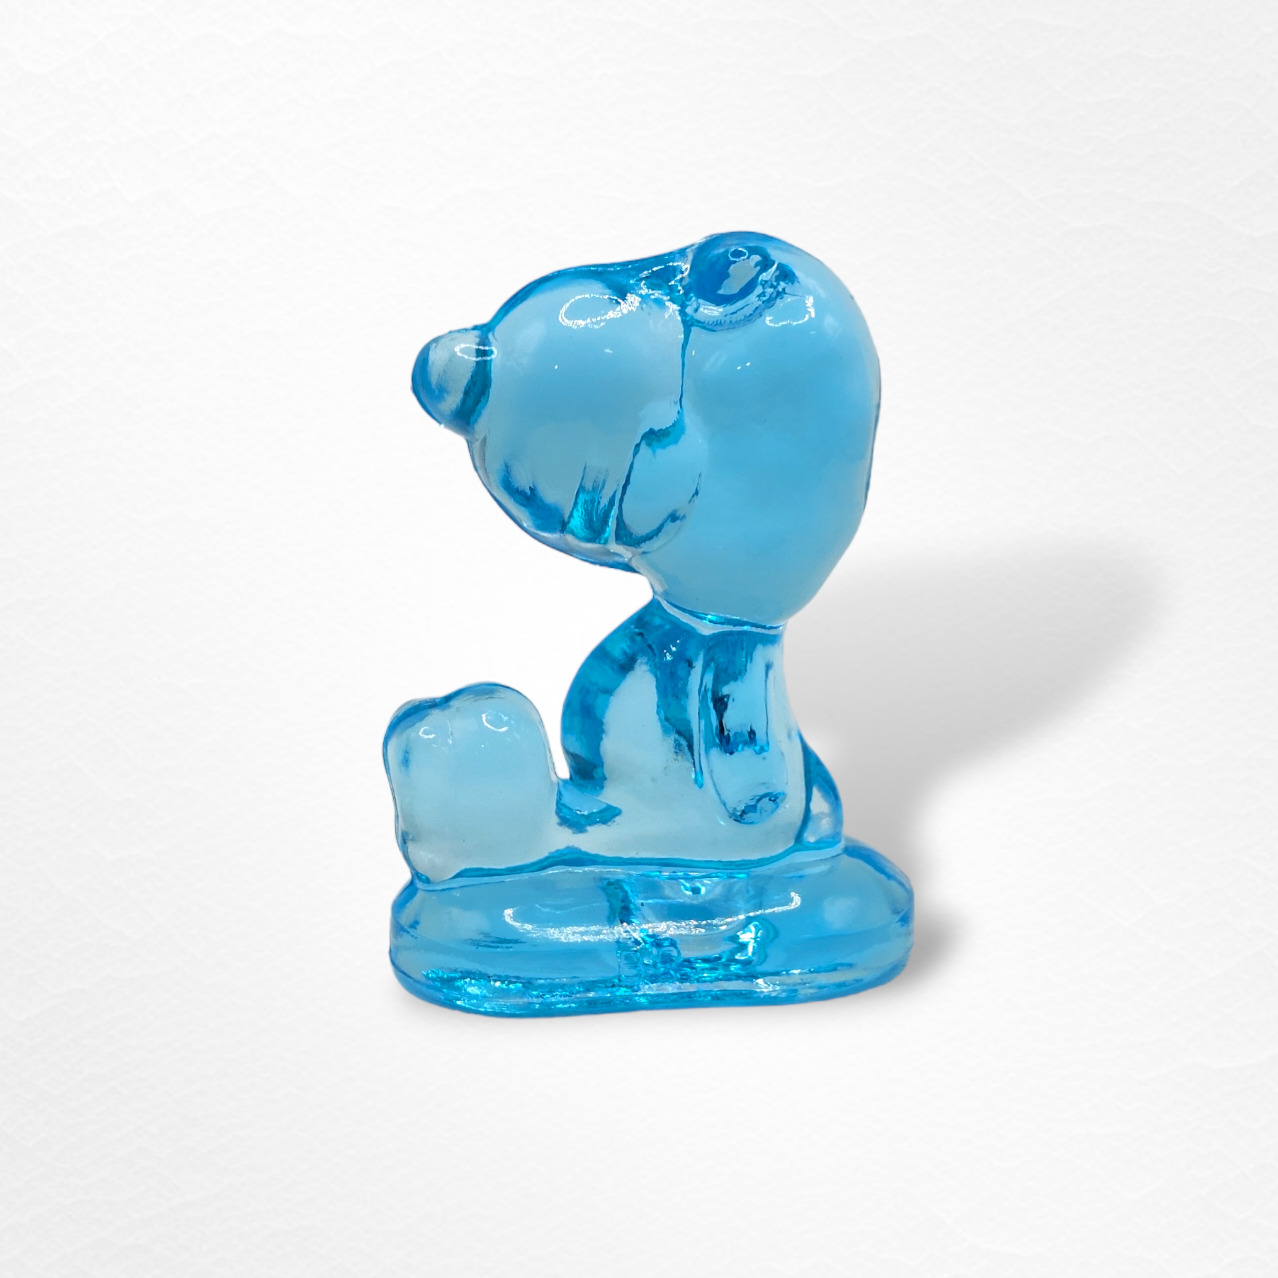 Vaseline Style Uranium Glass Glow Puppy Dog Figurine, Vintage Style, Retro Decor